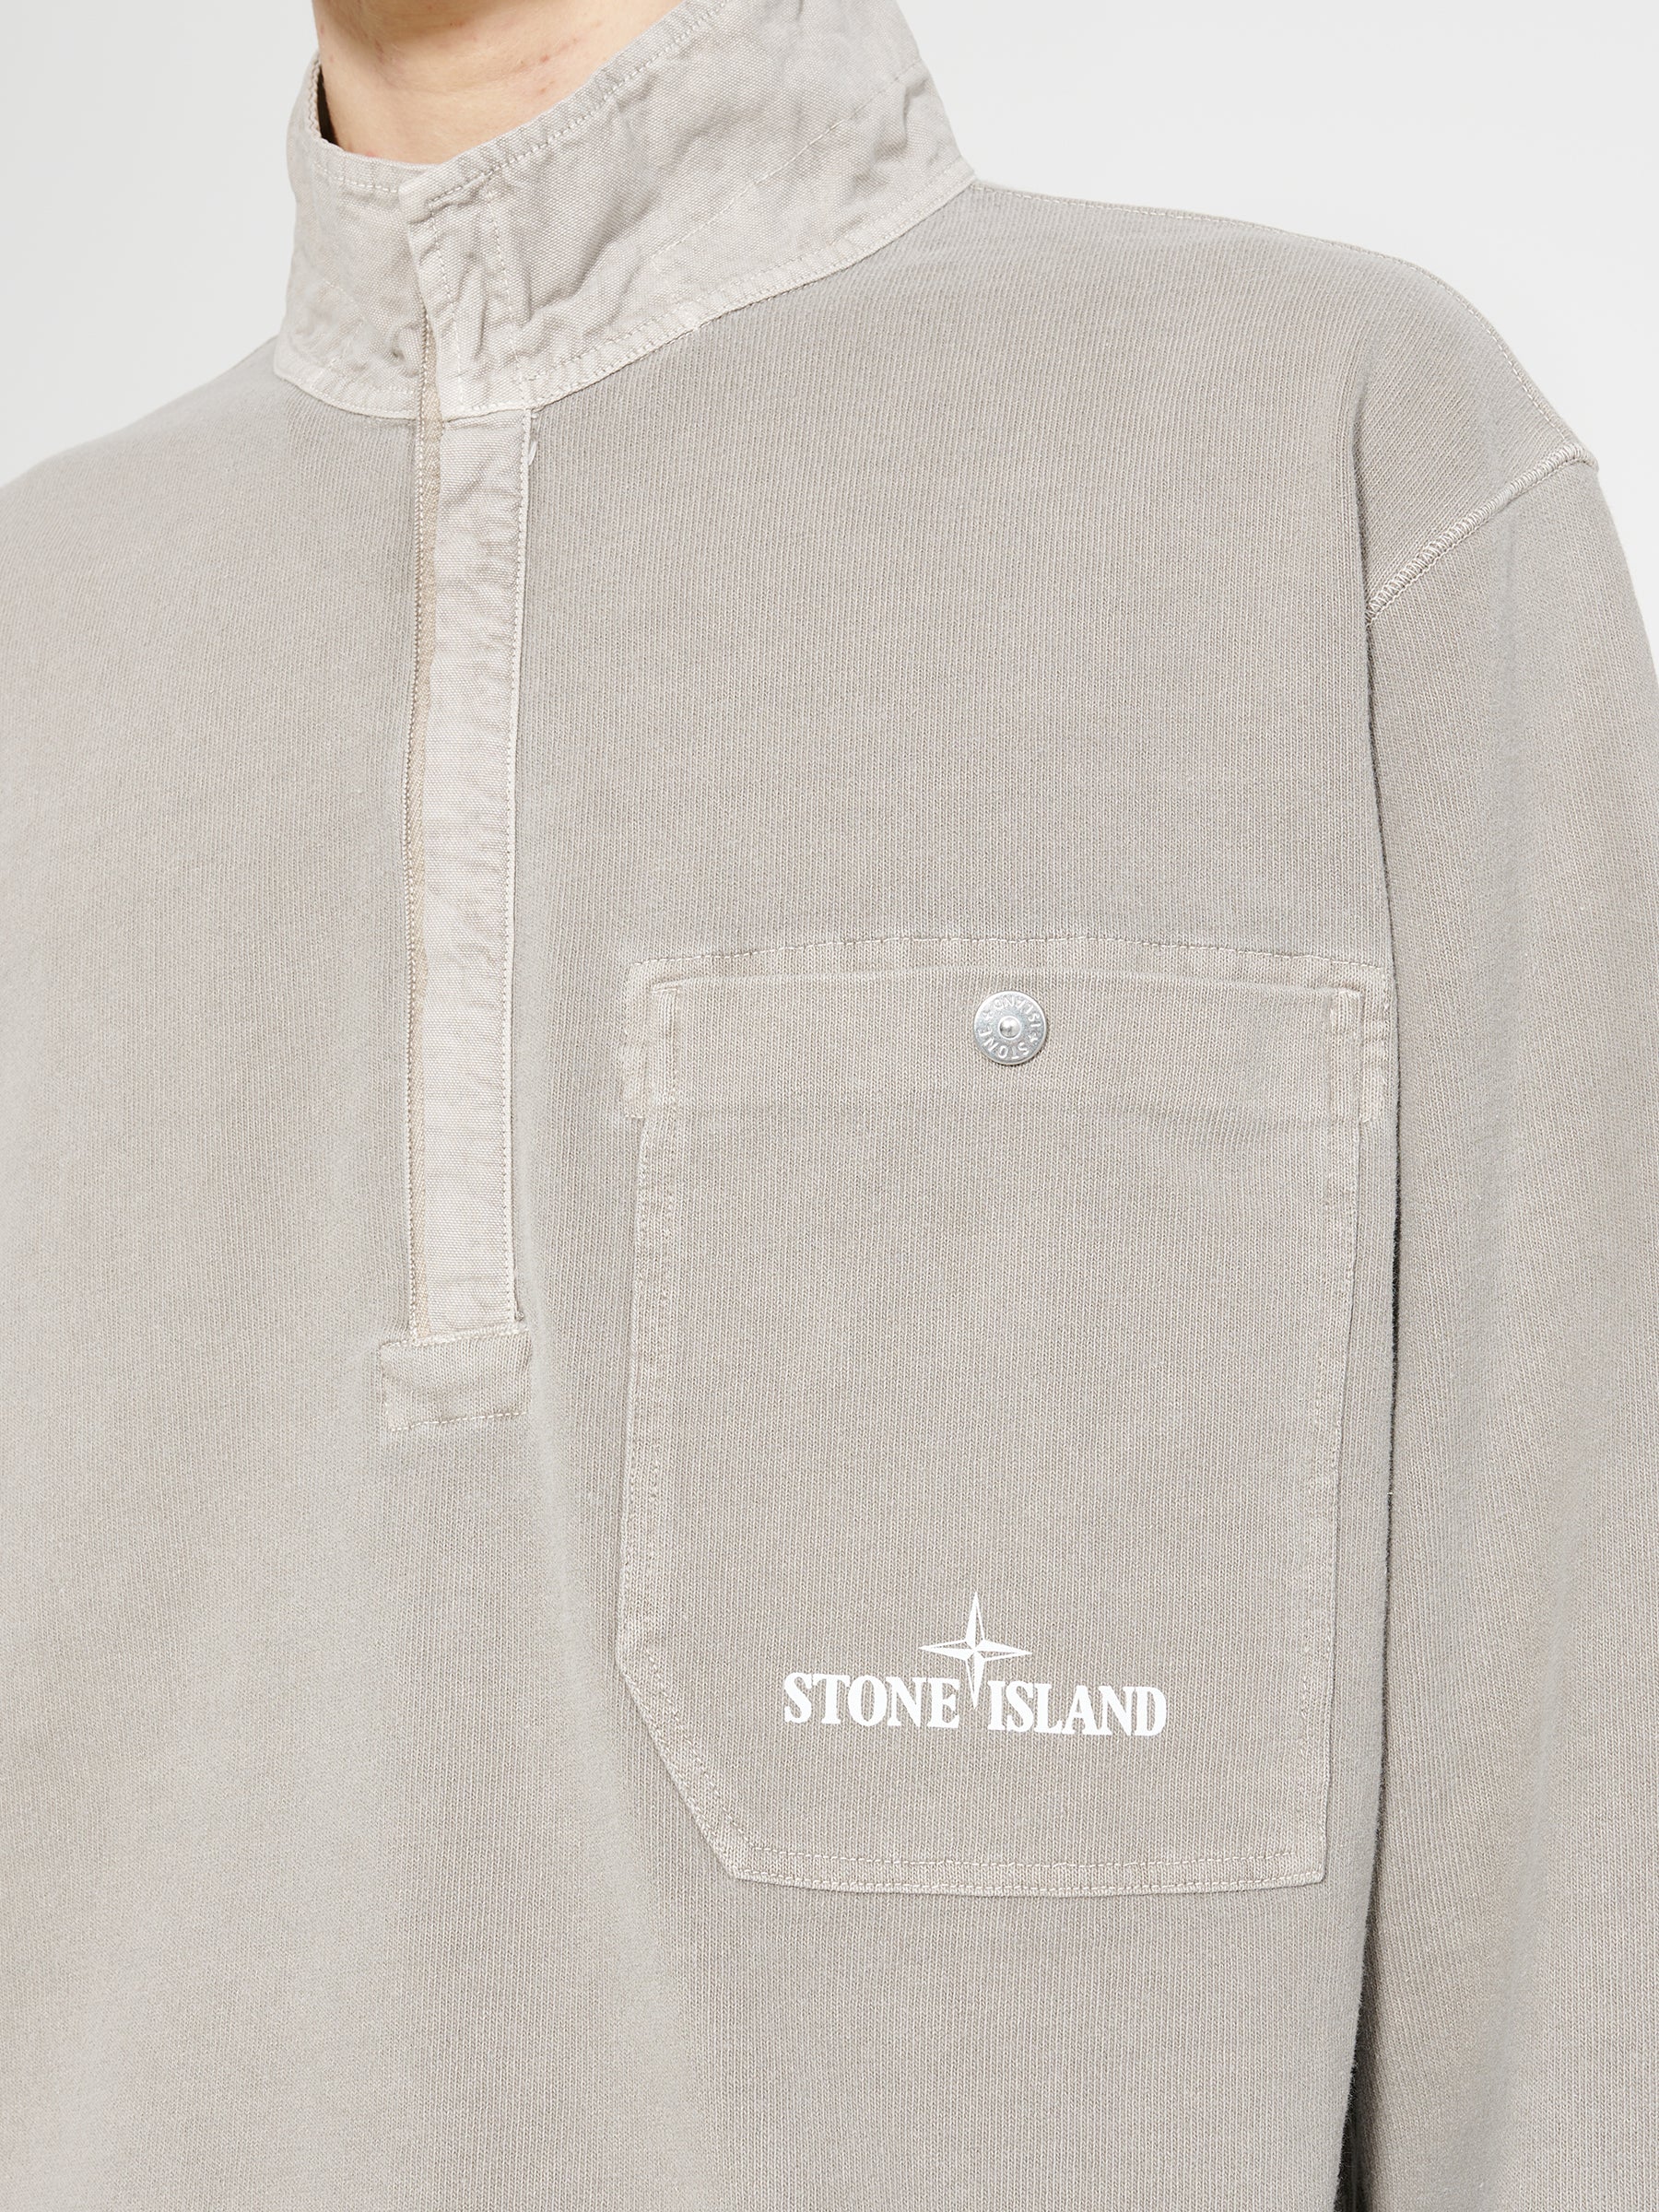 Stone Island Half-Zip Sweatshirt Dust